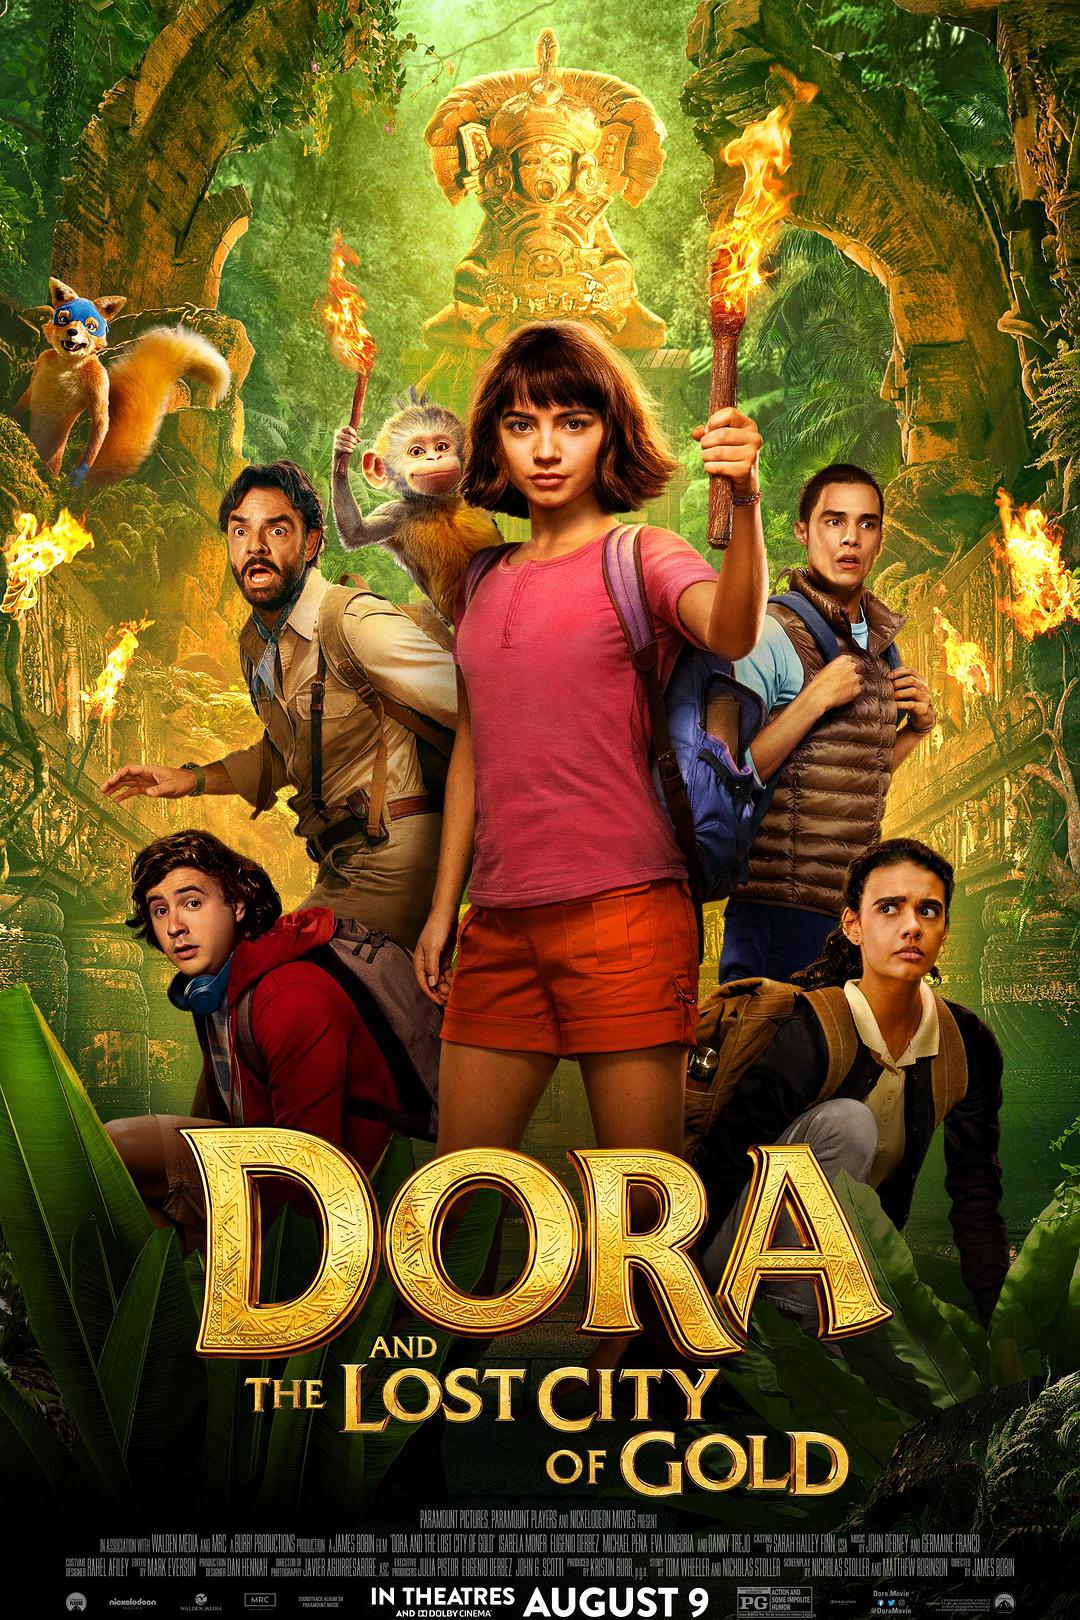 爱探险的朵拉:消失的黄金城 Dora.and.the.Lost.City.of.Gold.2019.1080p.BluRay.REMUX.AVC.DTS-HD.MA.TrueHD.7.1.Atmos-FGT 29.00GB-1.png